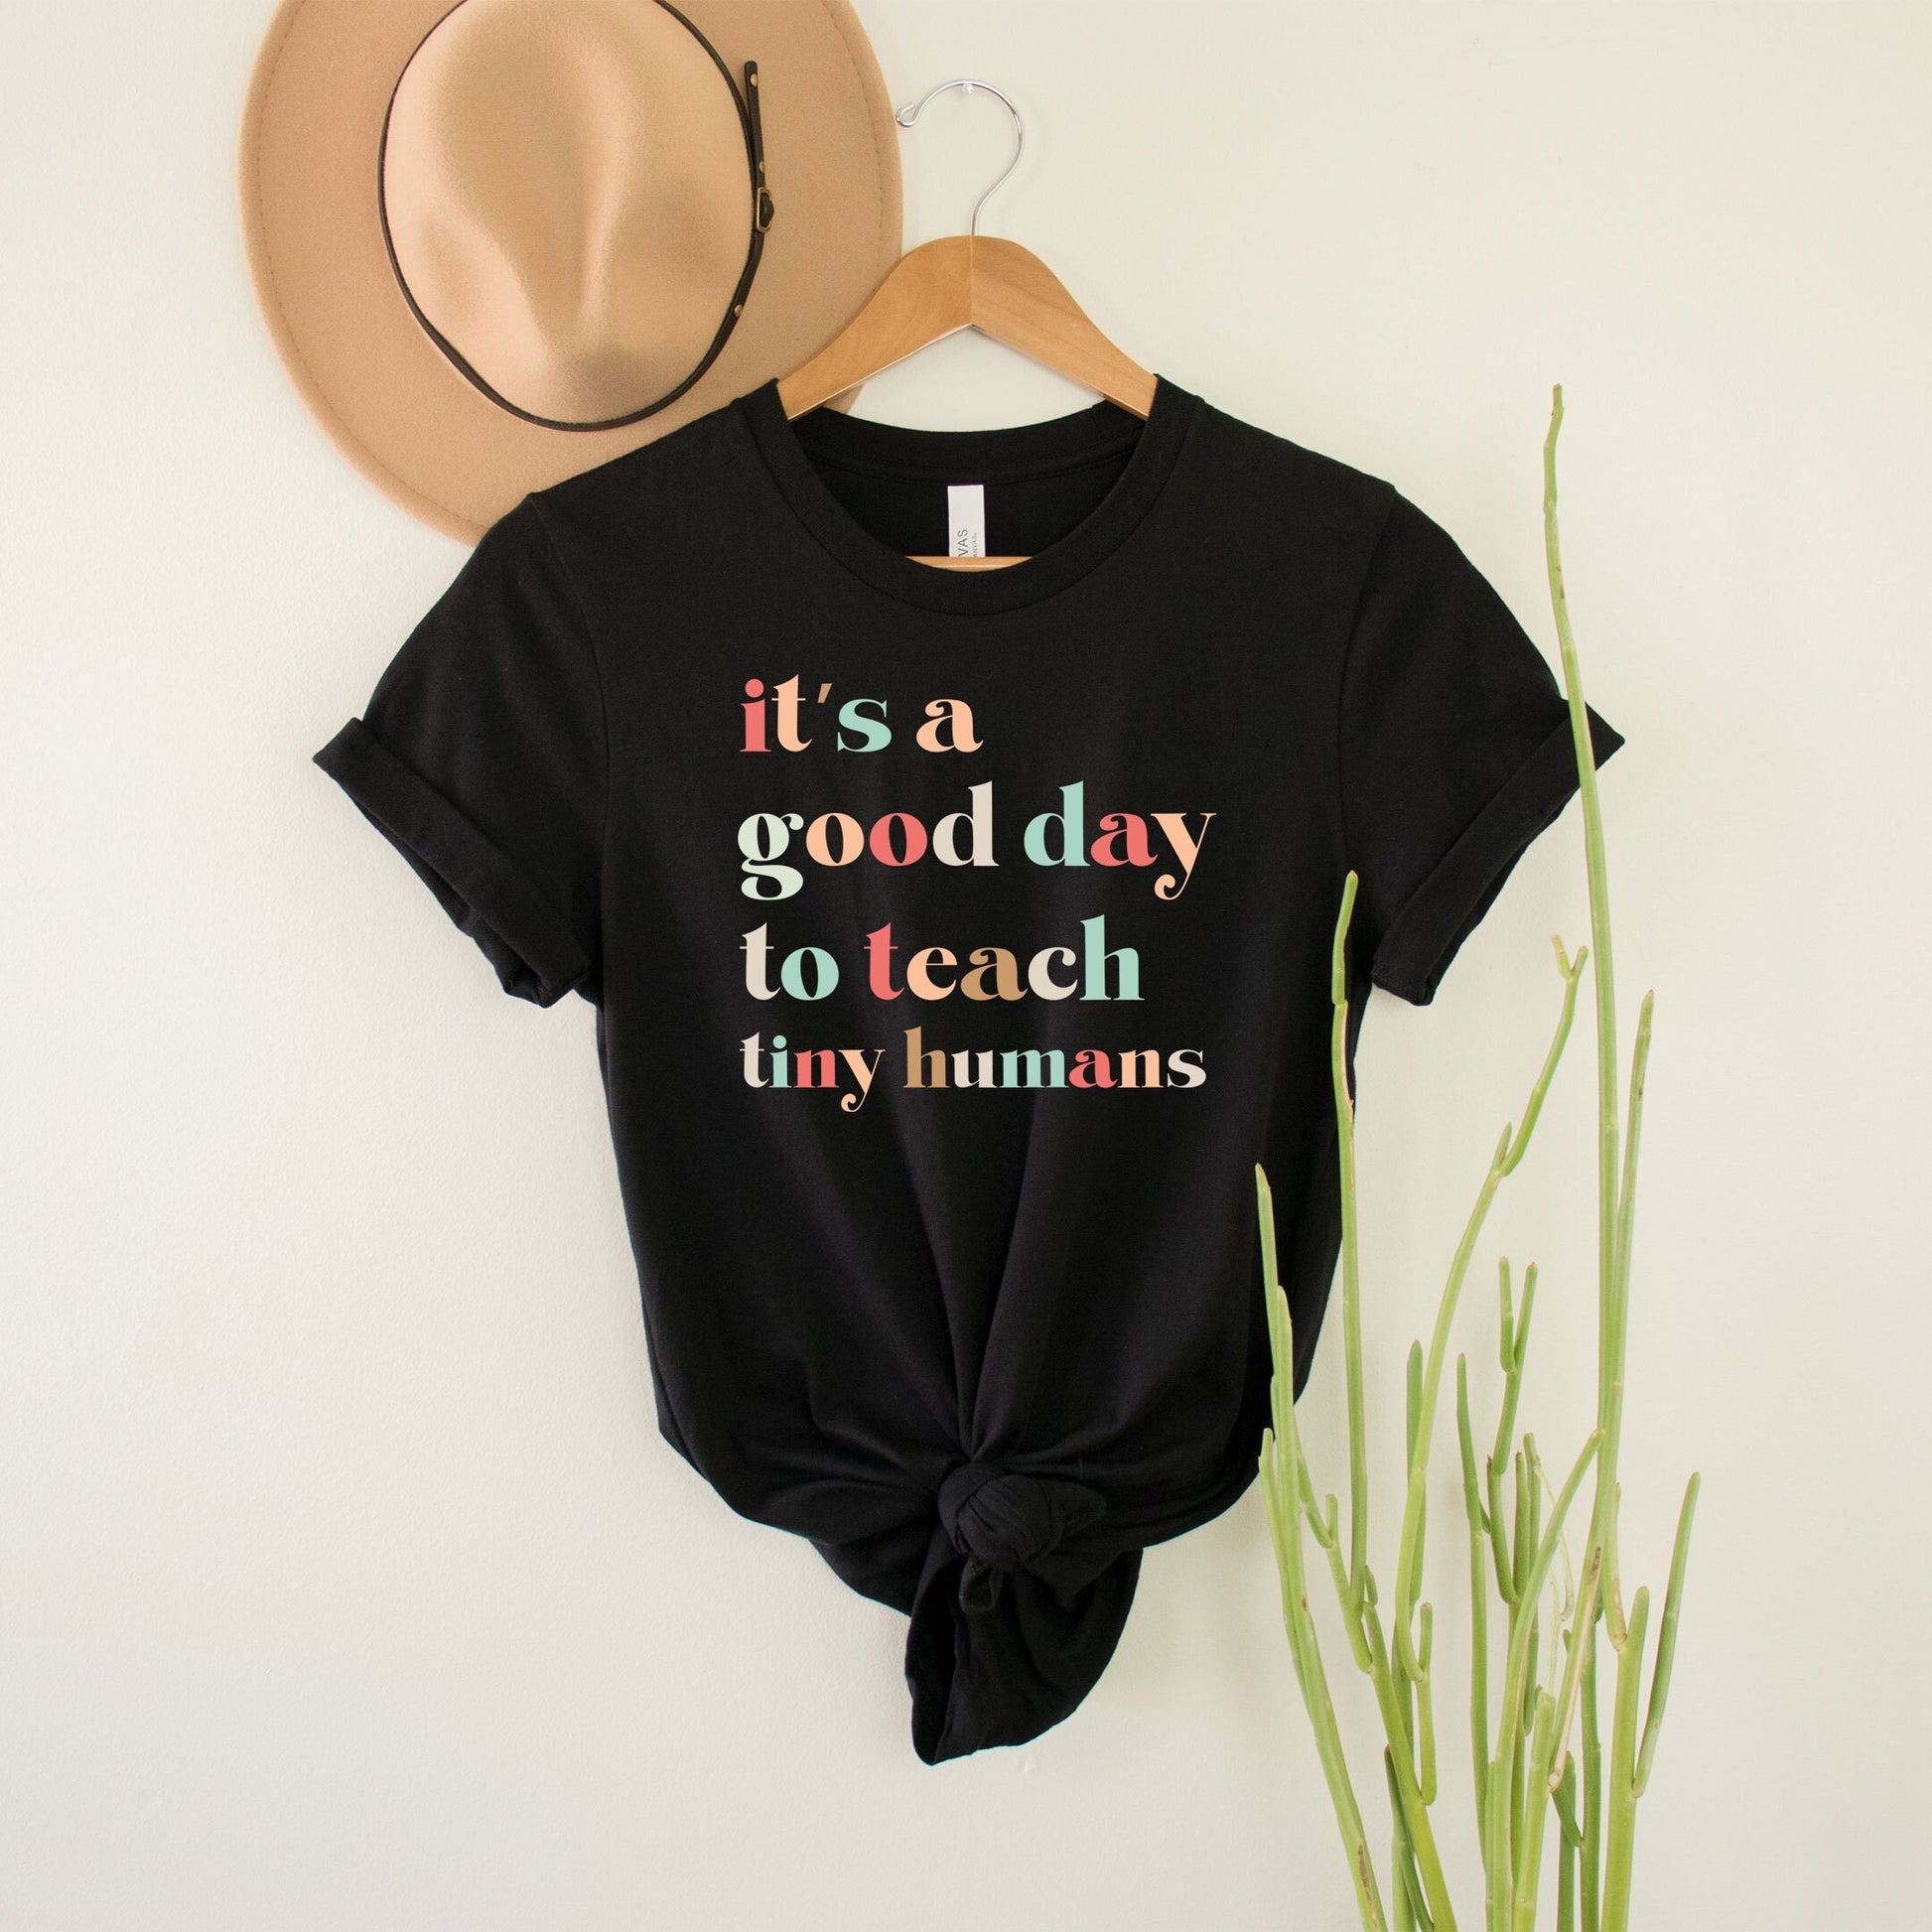 It's A Good Day To Teach Tiny Humans Shirt, Kinder Teacher Appreciation Preschool Pre-K Boho Kindergarten Teach Love Inspire Everyday Tee